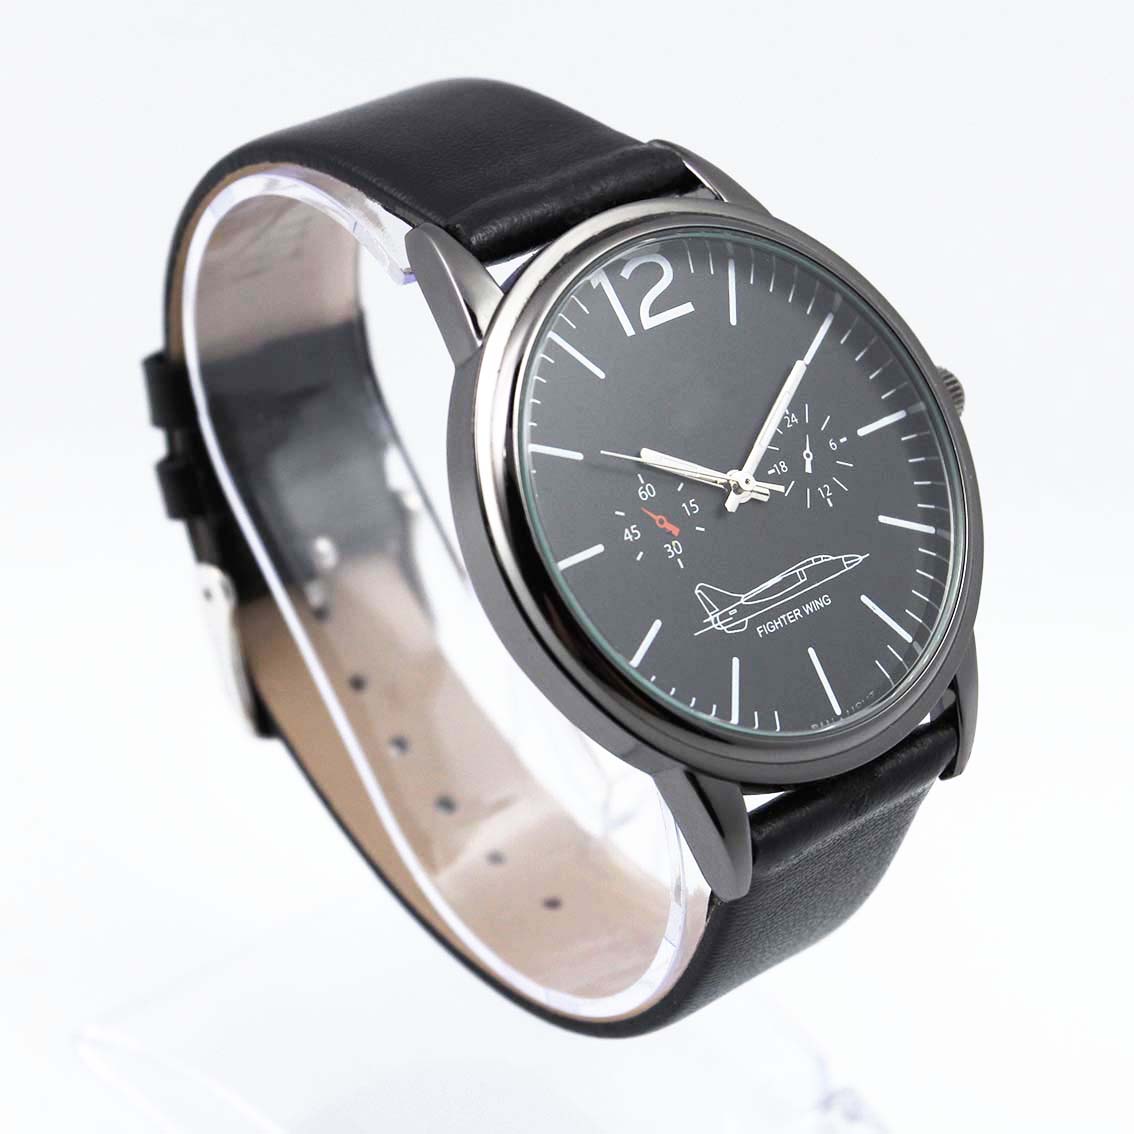 #02082Men's wristwatch quartz analog leather strap watch